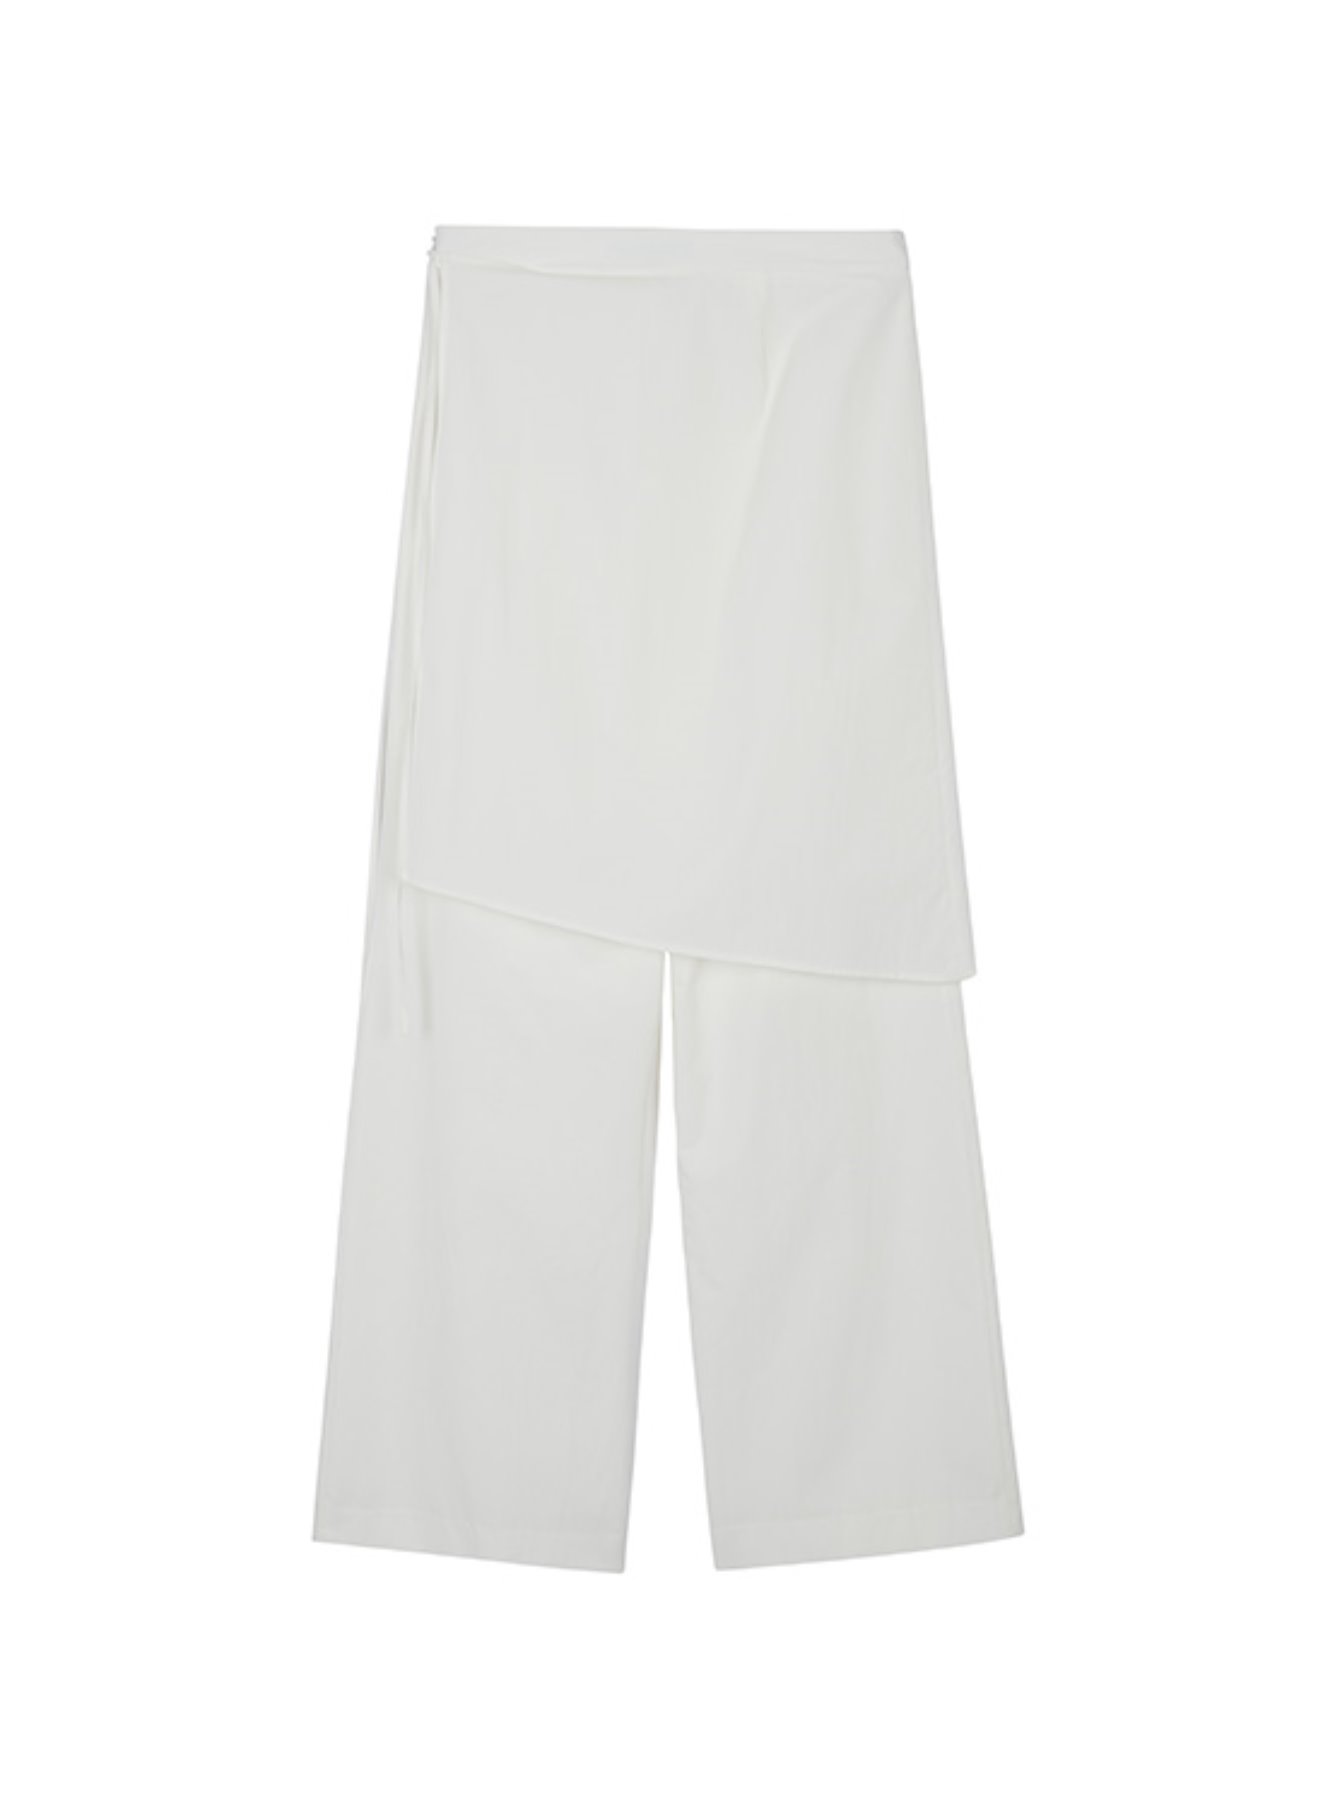 Wrap Skirt Layered Pants in White VW2SL160-01